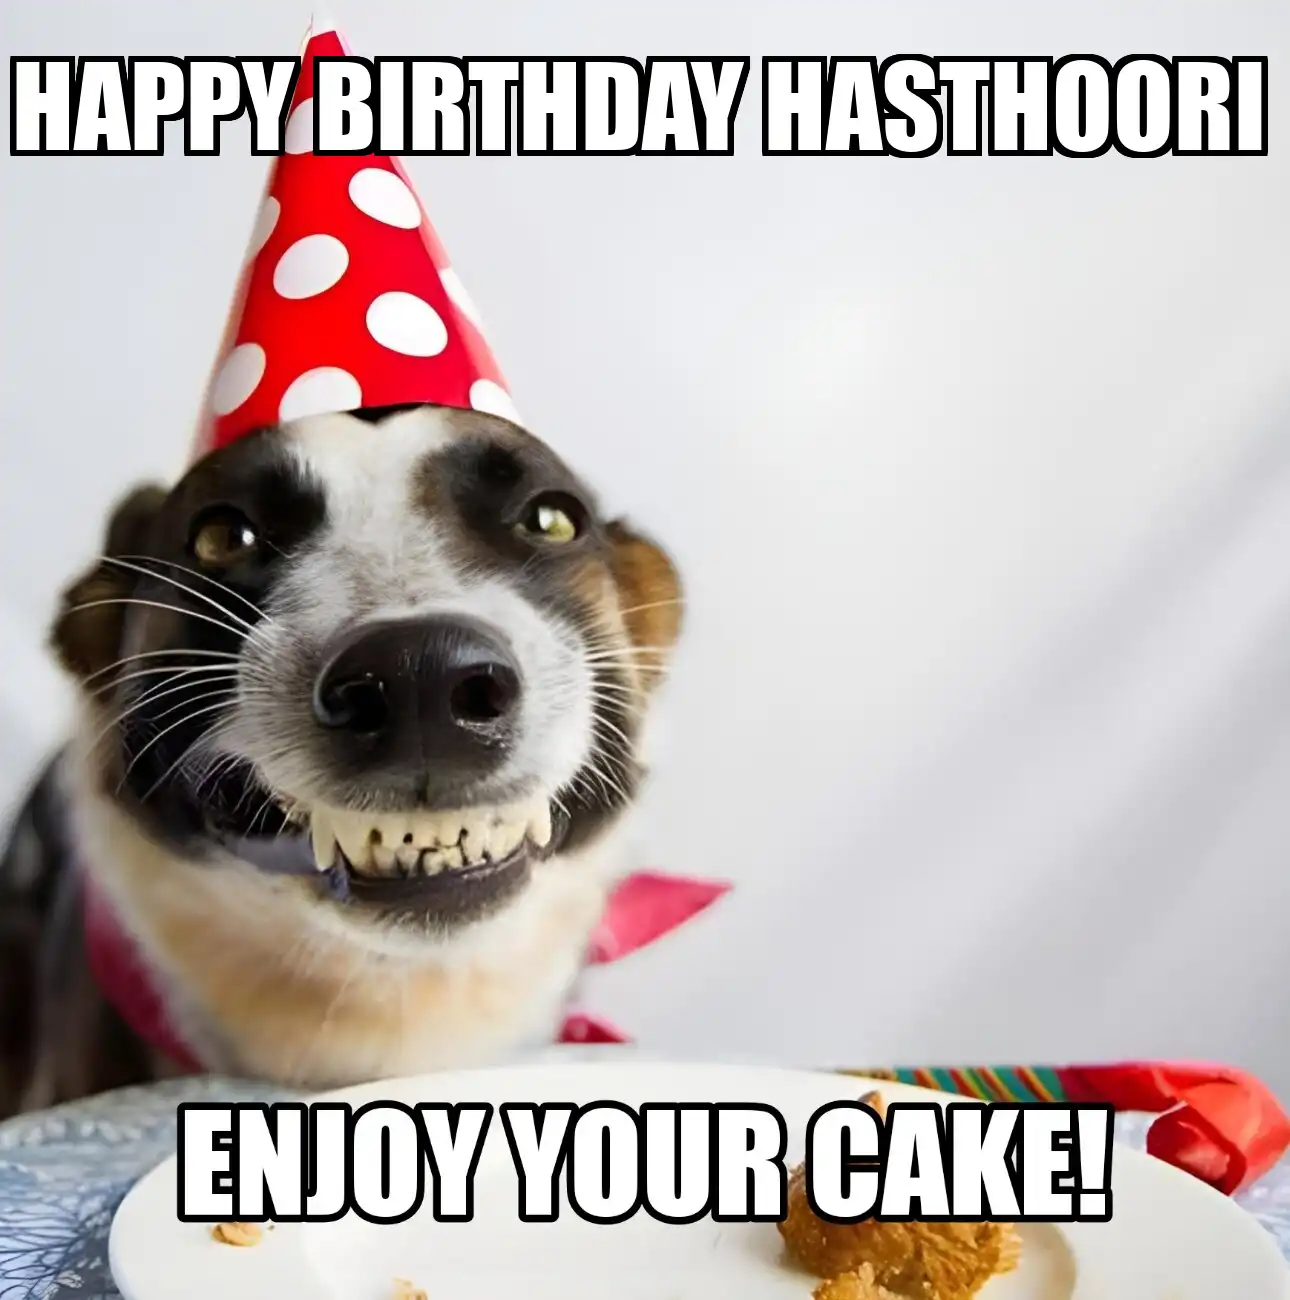 Happy Birthday Hasthoori Enjoy Your Cake Dog Meme